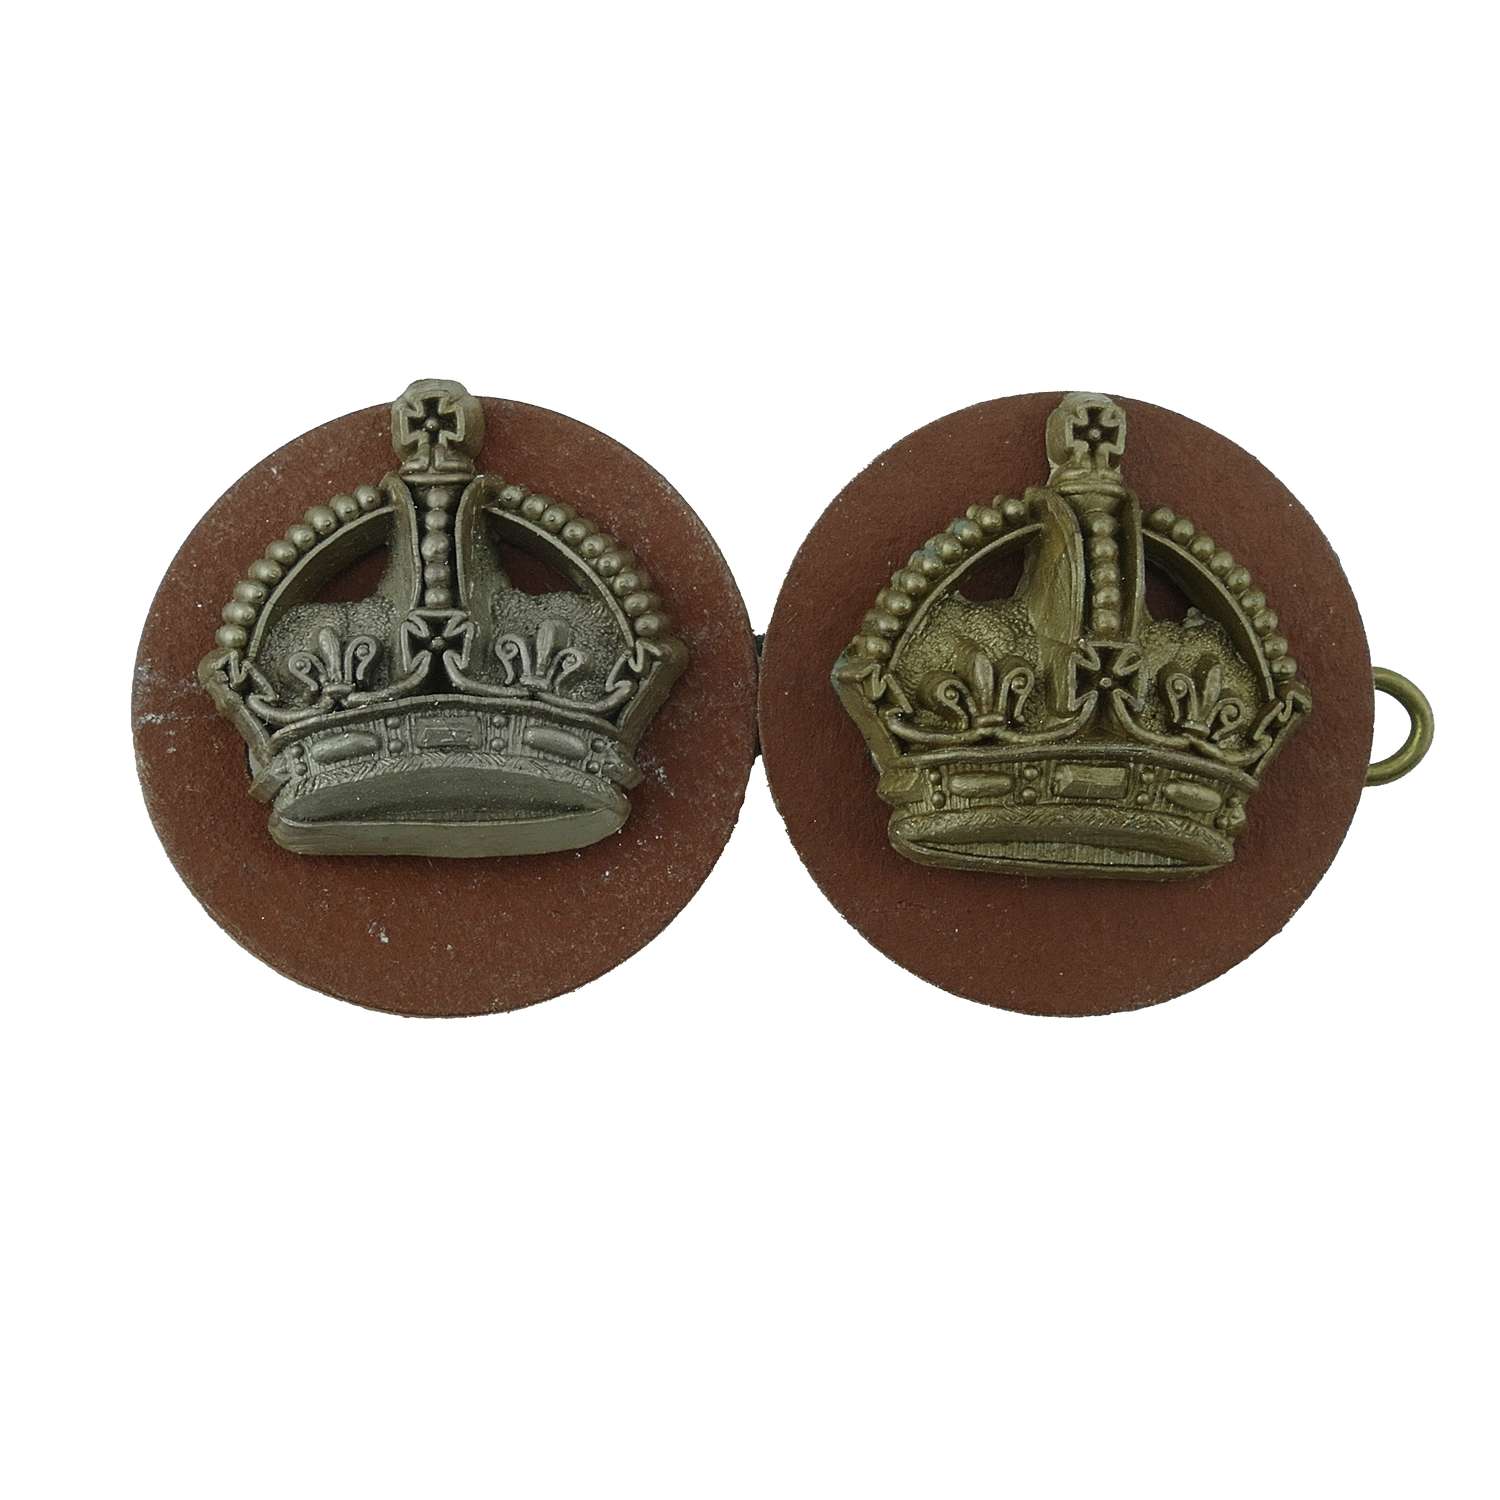 RAF flight sergeant crowns, pair